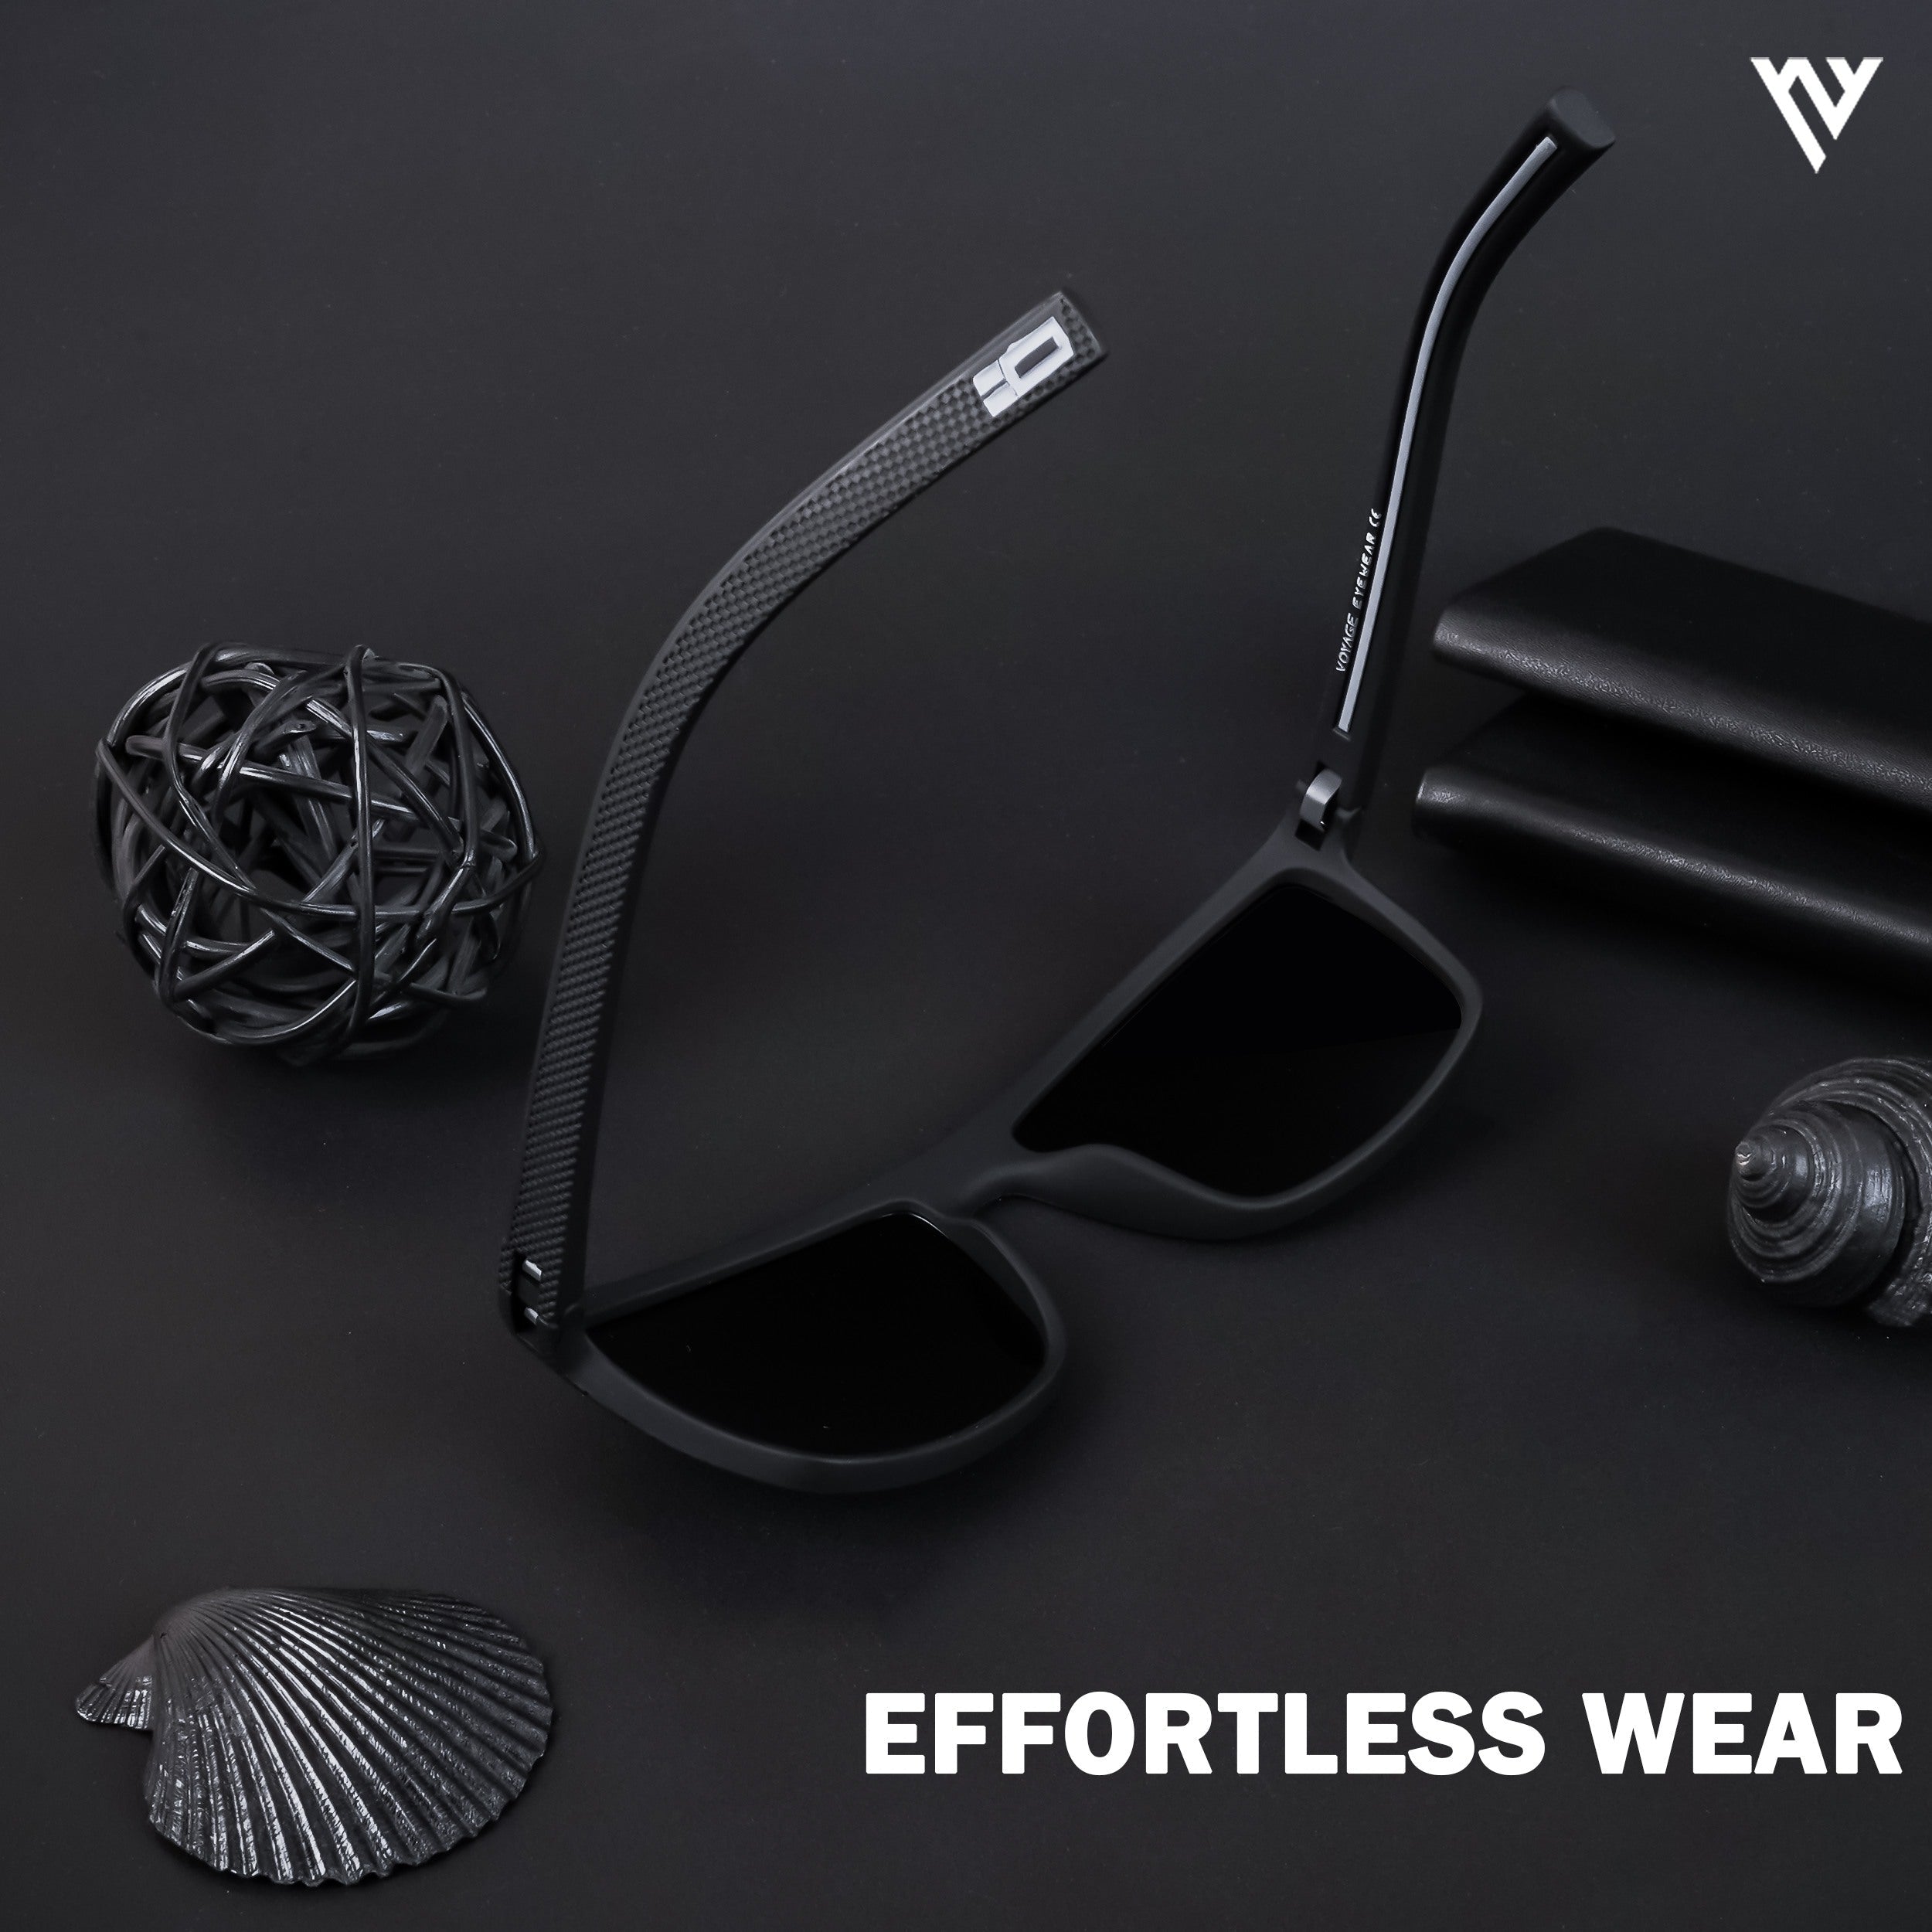 Voyage Exclusive Black Polarized Wayfarer Sunglasses for Men & Women - PMG4295